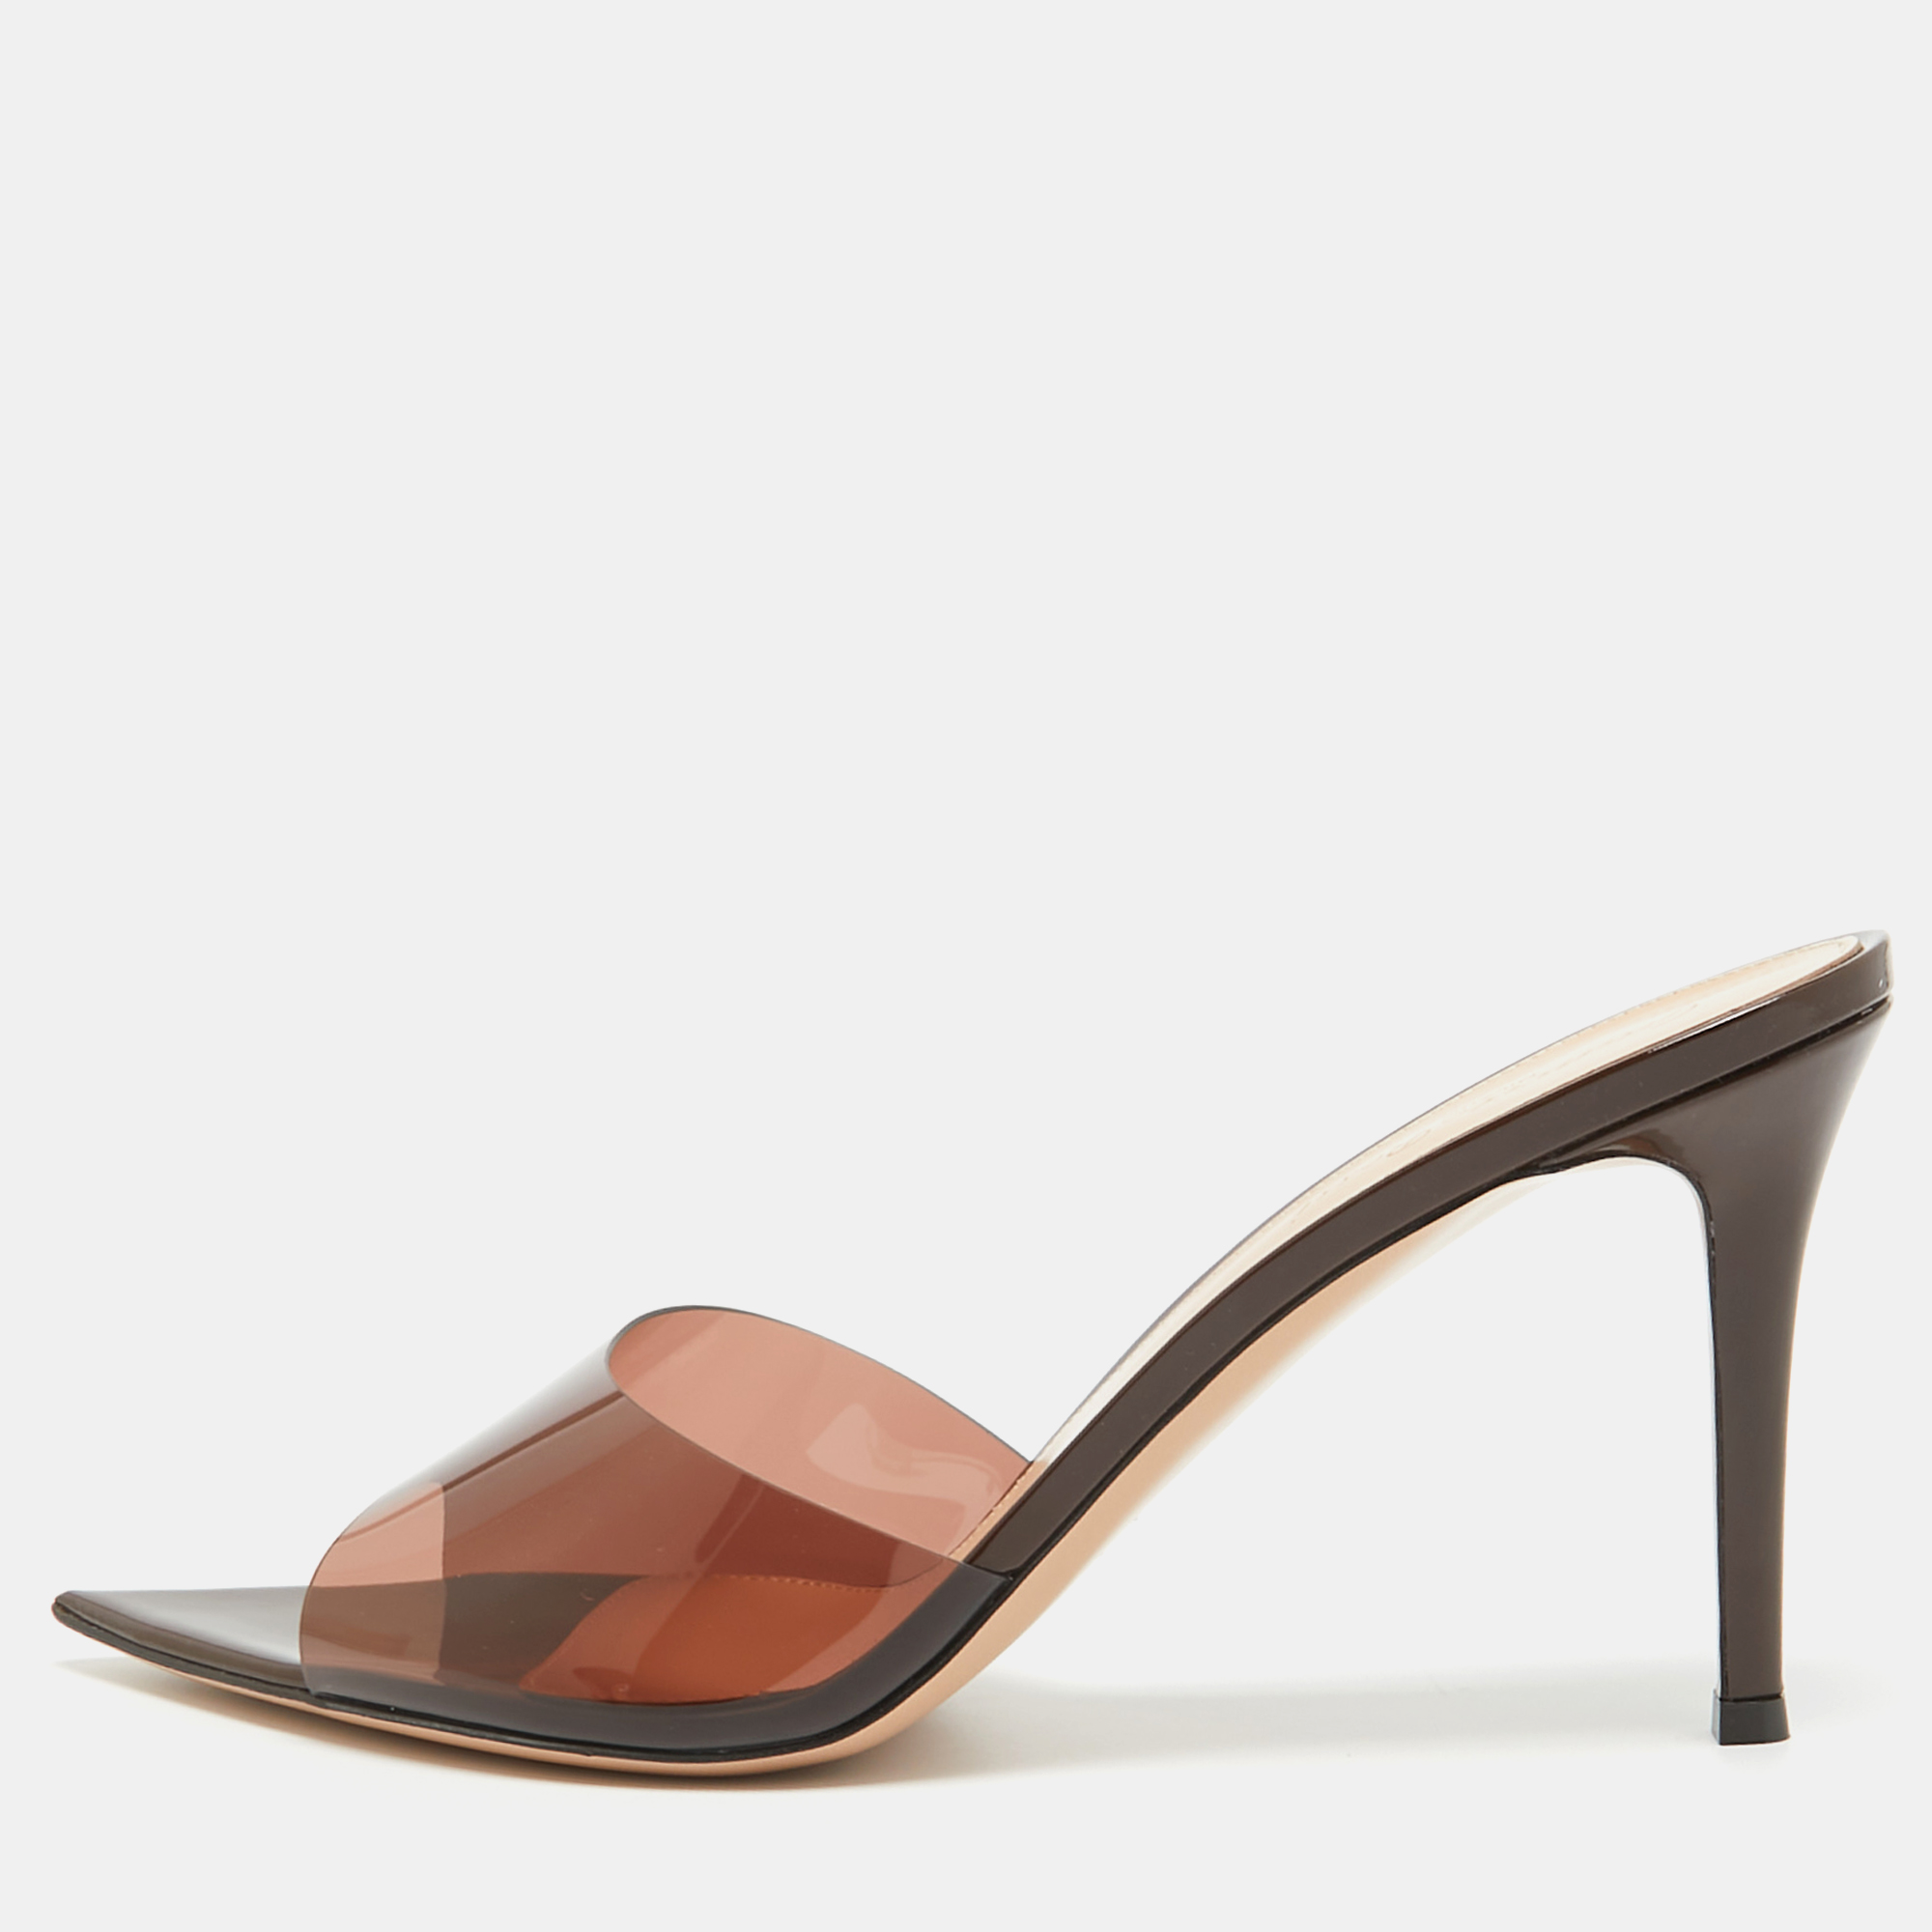 Gianvito rossi brown pvc elle slide sandals size 42